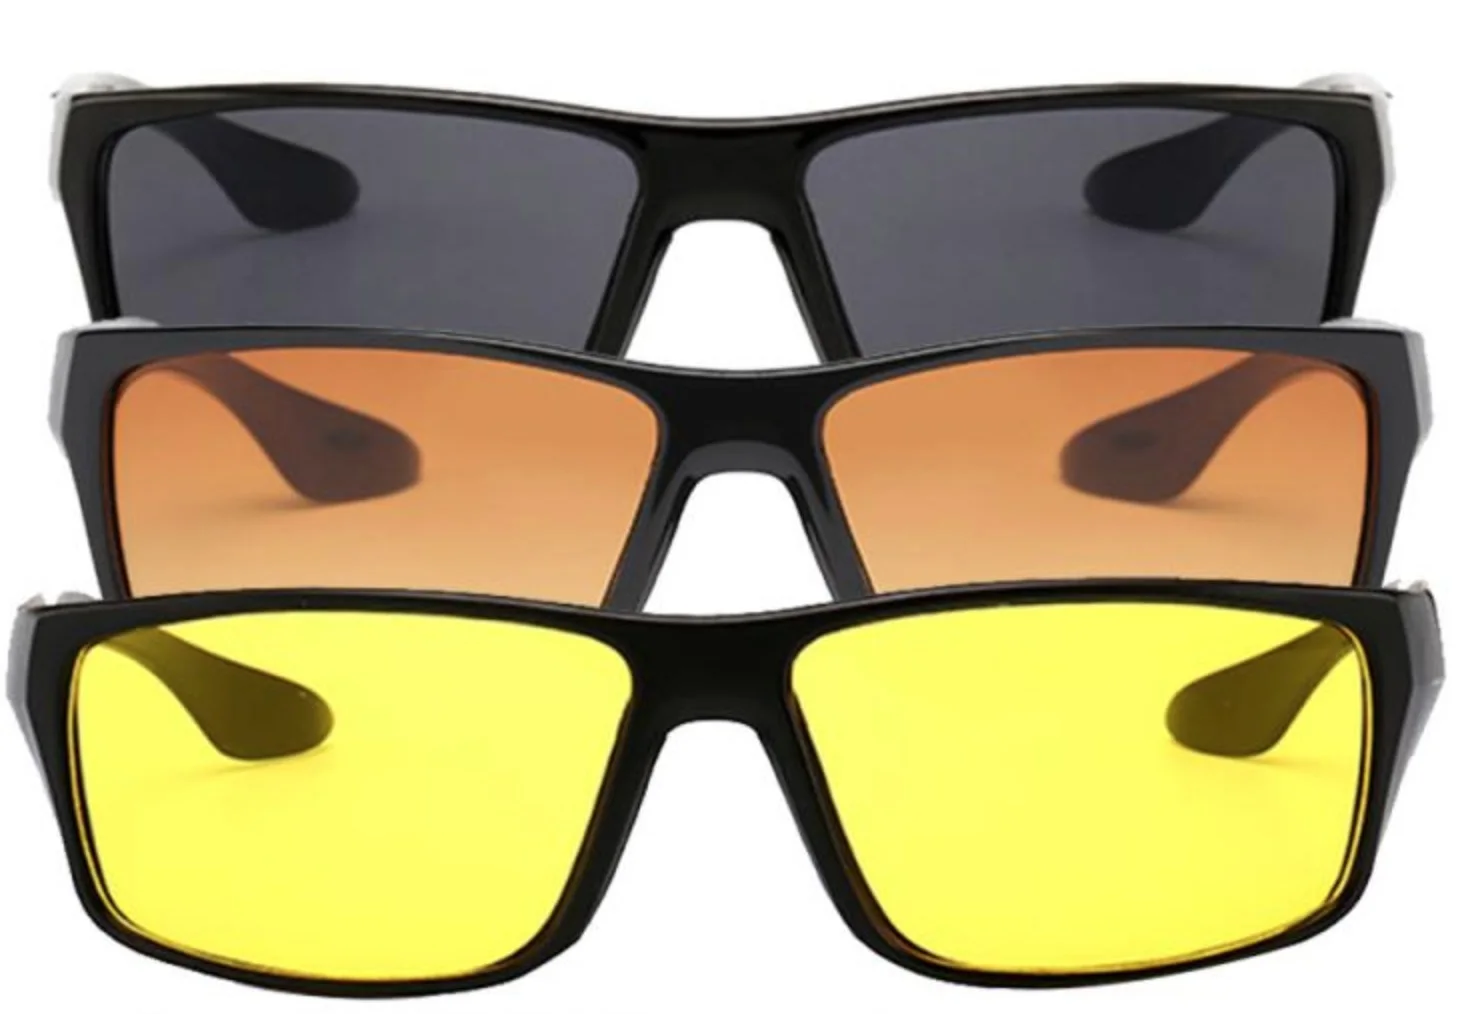 Outdoor sports goggles driver driving sunglasses polarized sports sunglasses night vision goggles riding glasses Driver goggles